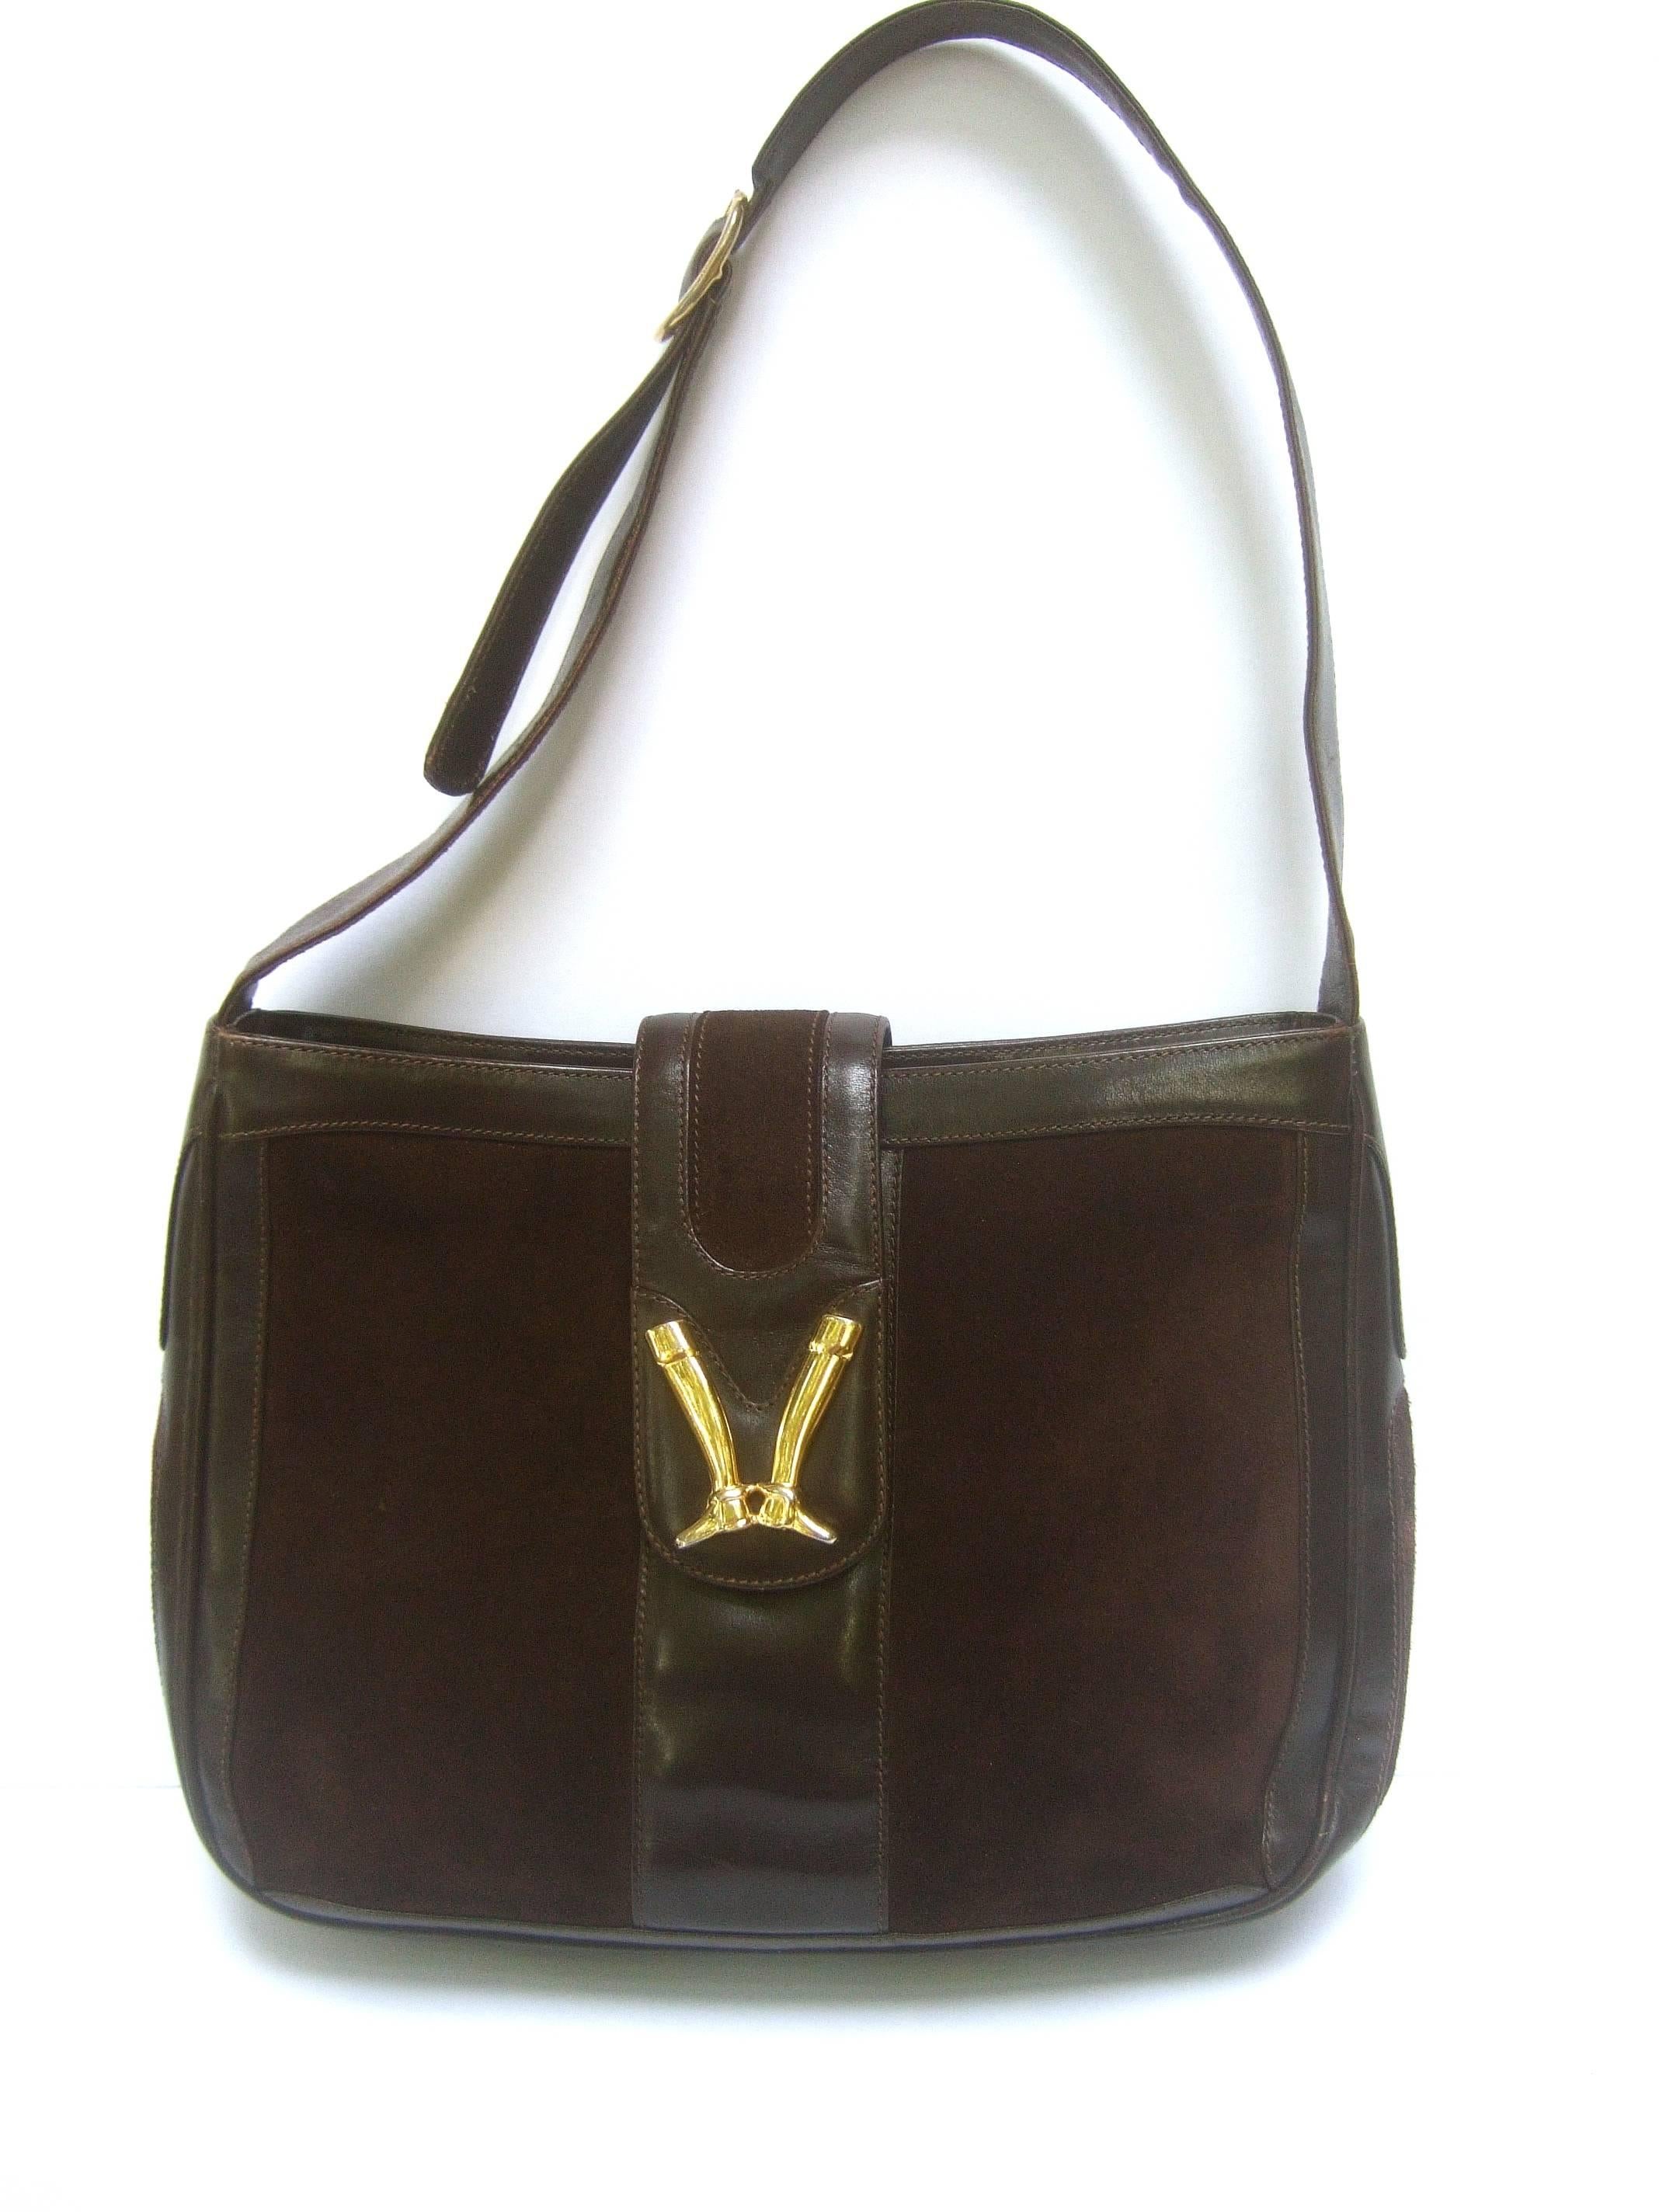 Gucci Rare Chocolate Brown Suede Equestrian Boot Emblem Shoulder Bag c 1970s 1